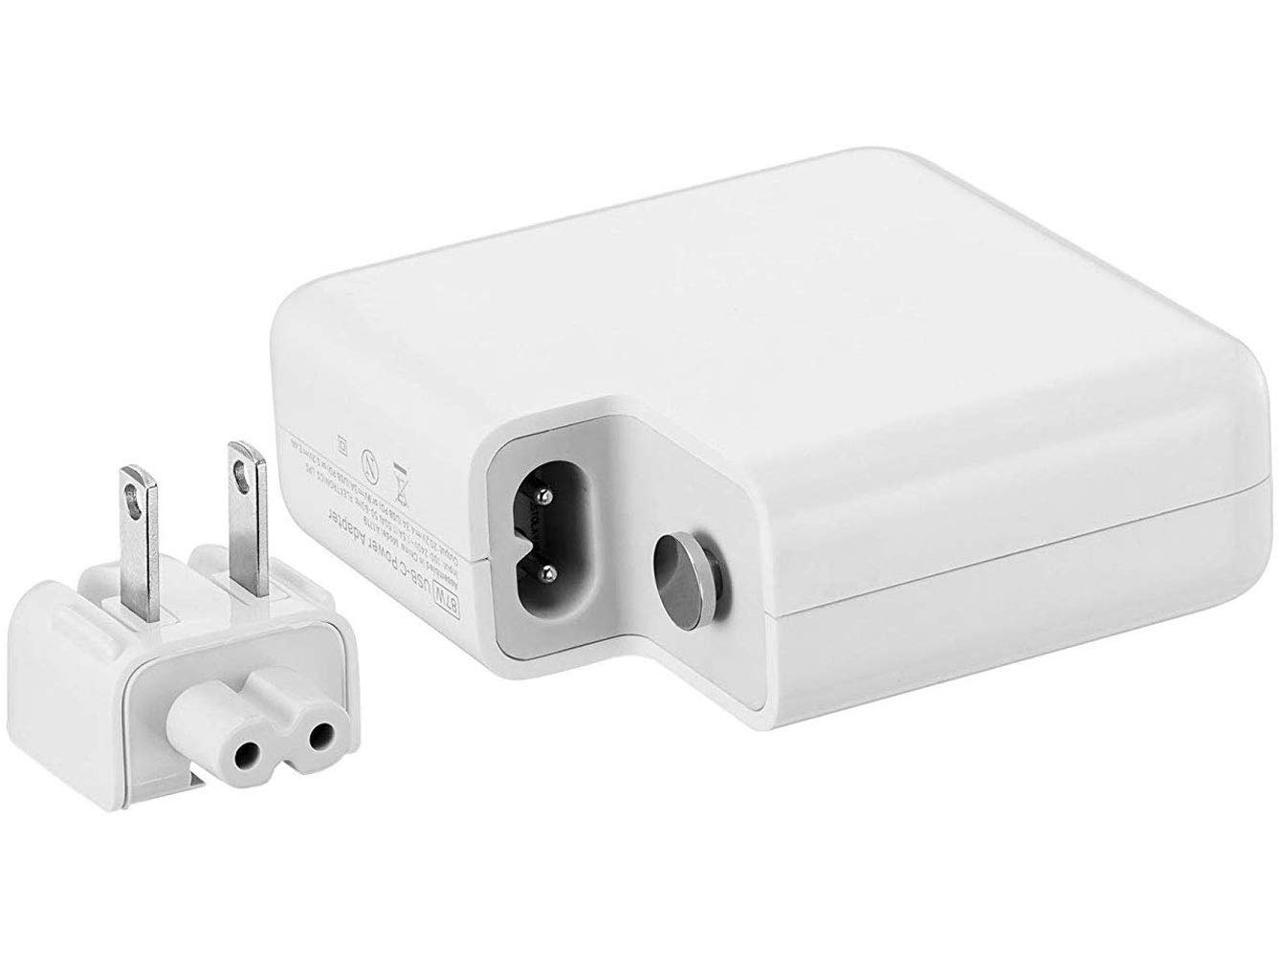 macbook pro usb c charger voltage